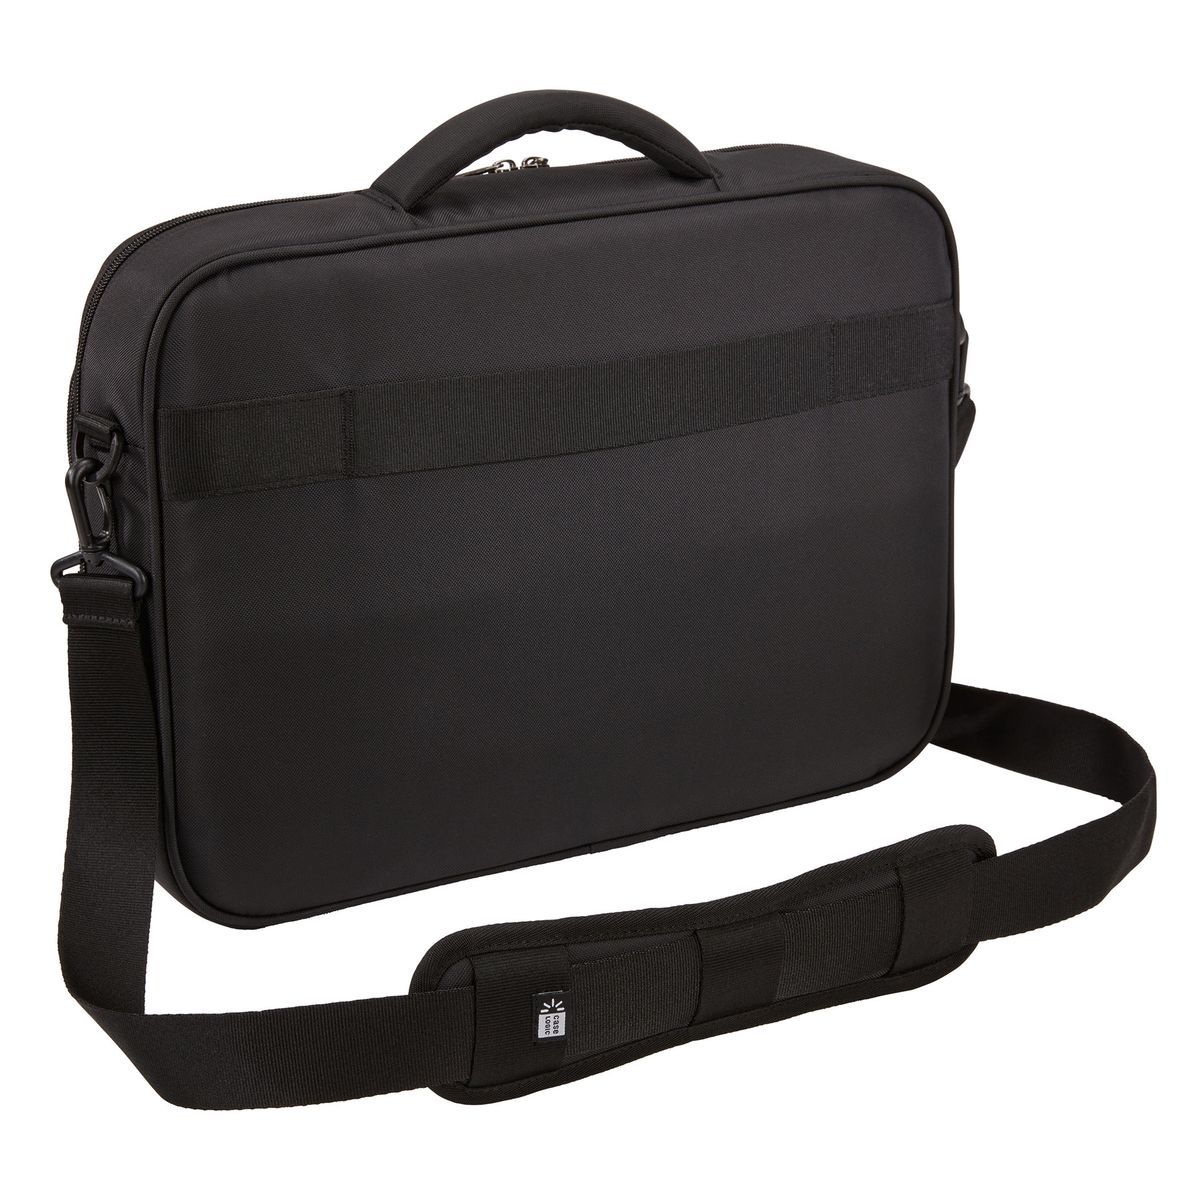 Case Logic Propel 15.6" Laptop Briefcase